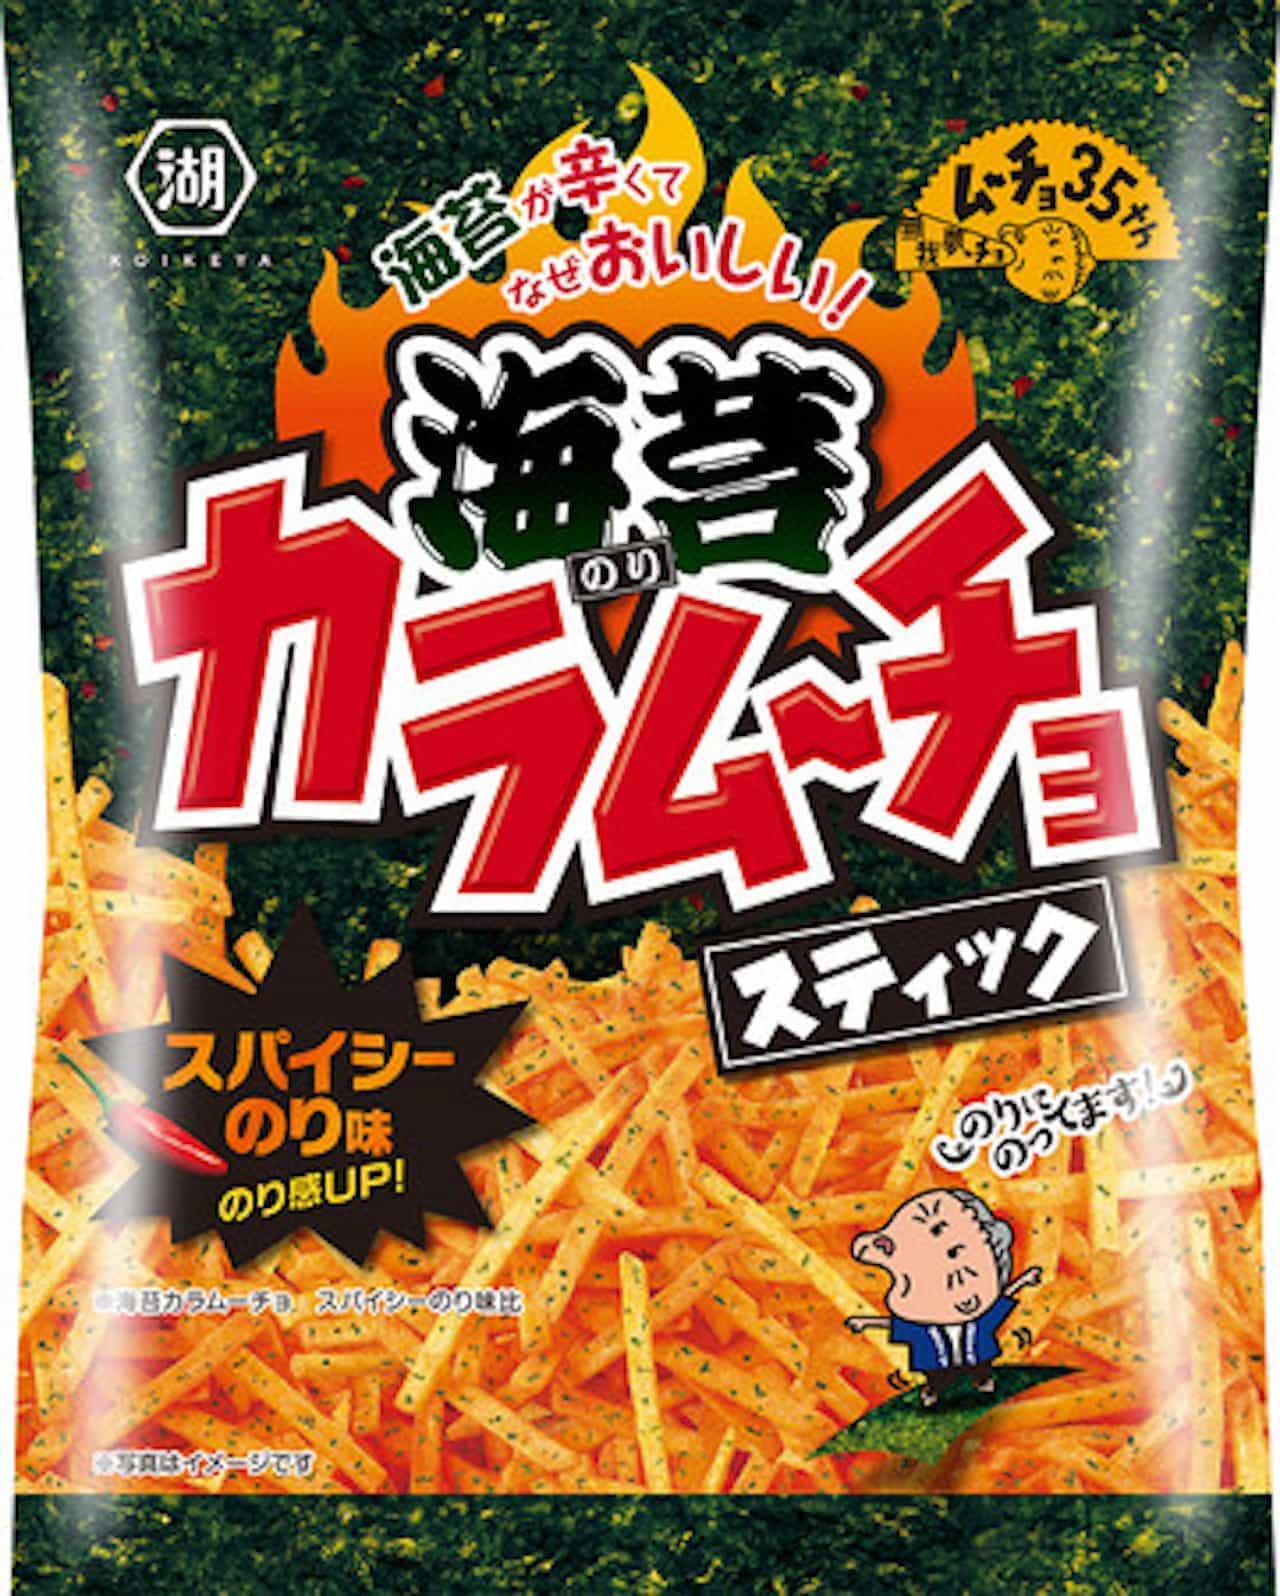 Koike-ya "Stick Seaweed Karamucho Spicy Glue Flavor"